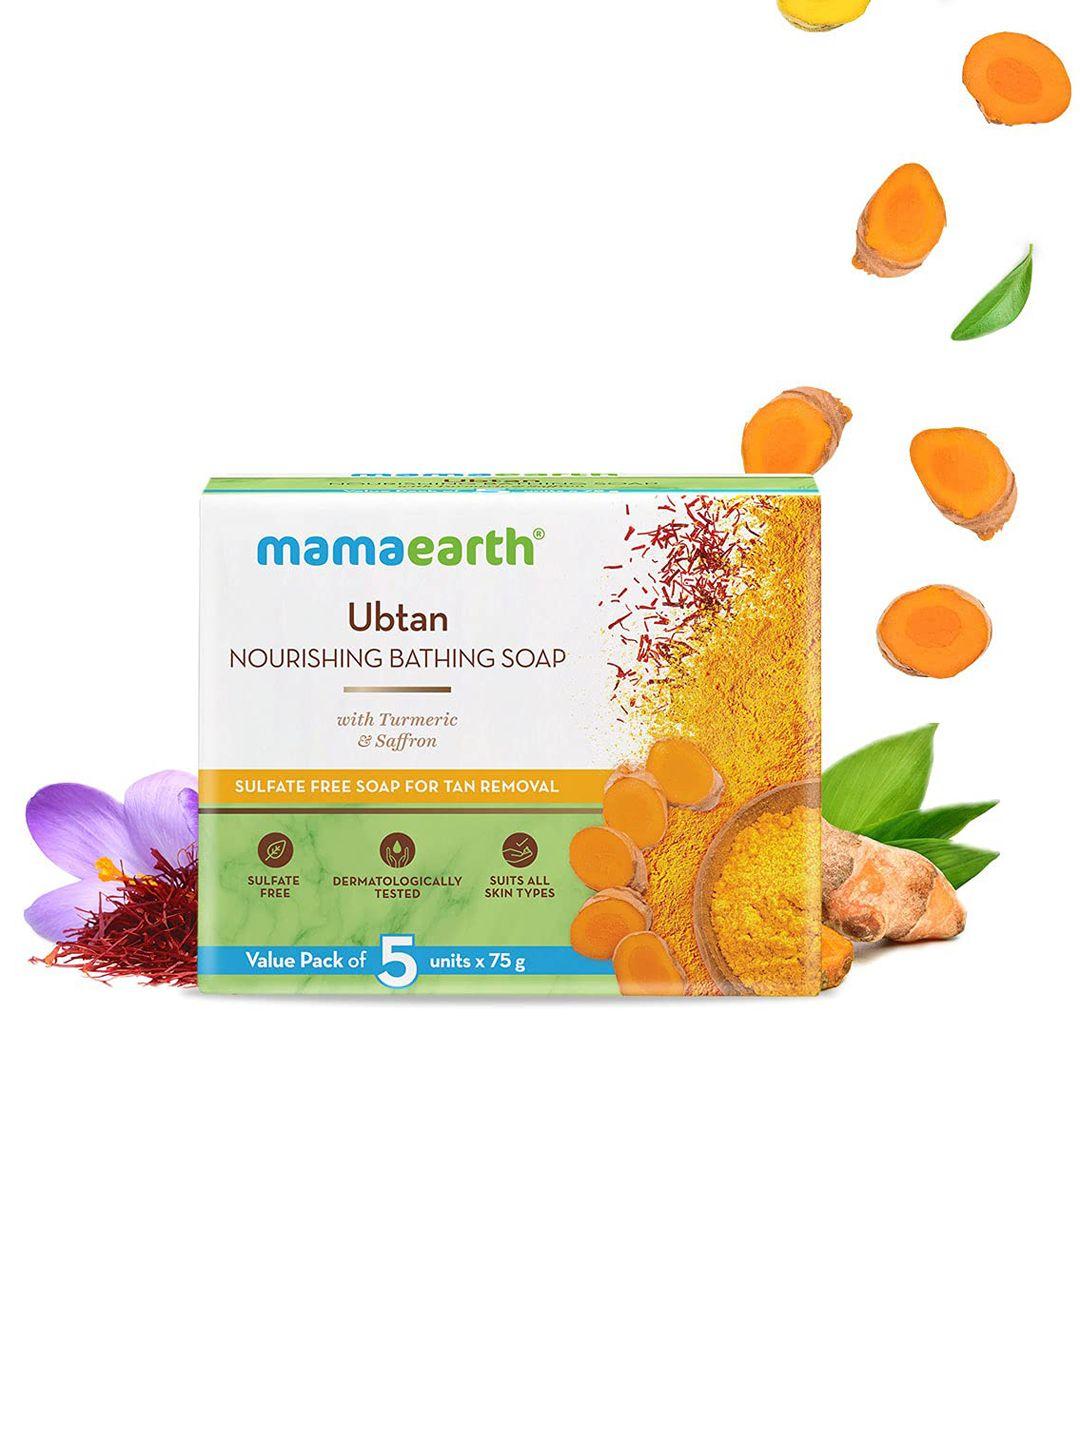 mamaearth ubtan nourishing bathing soap with turmeric & saffron - 375 g